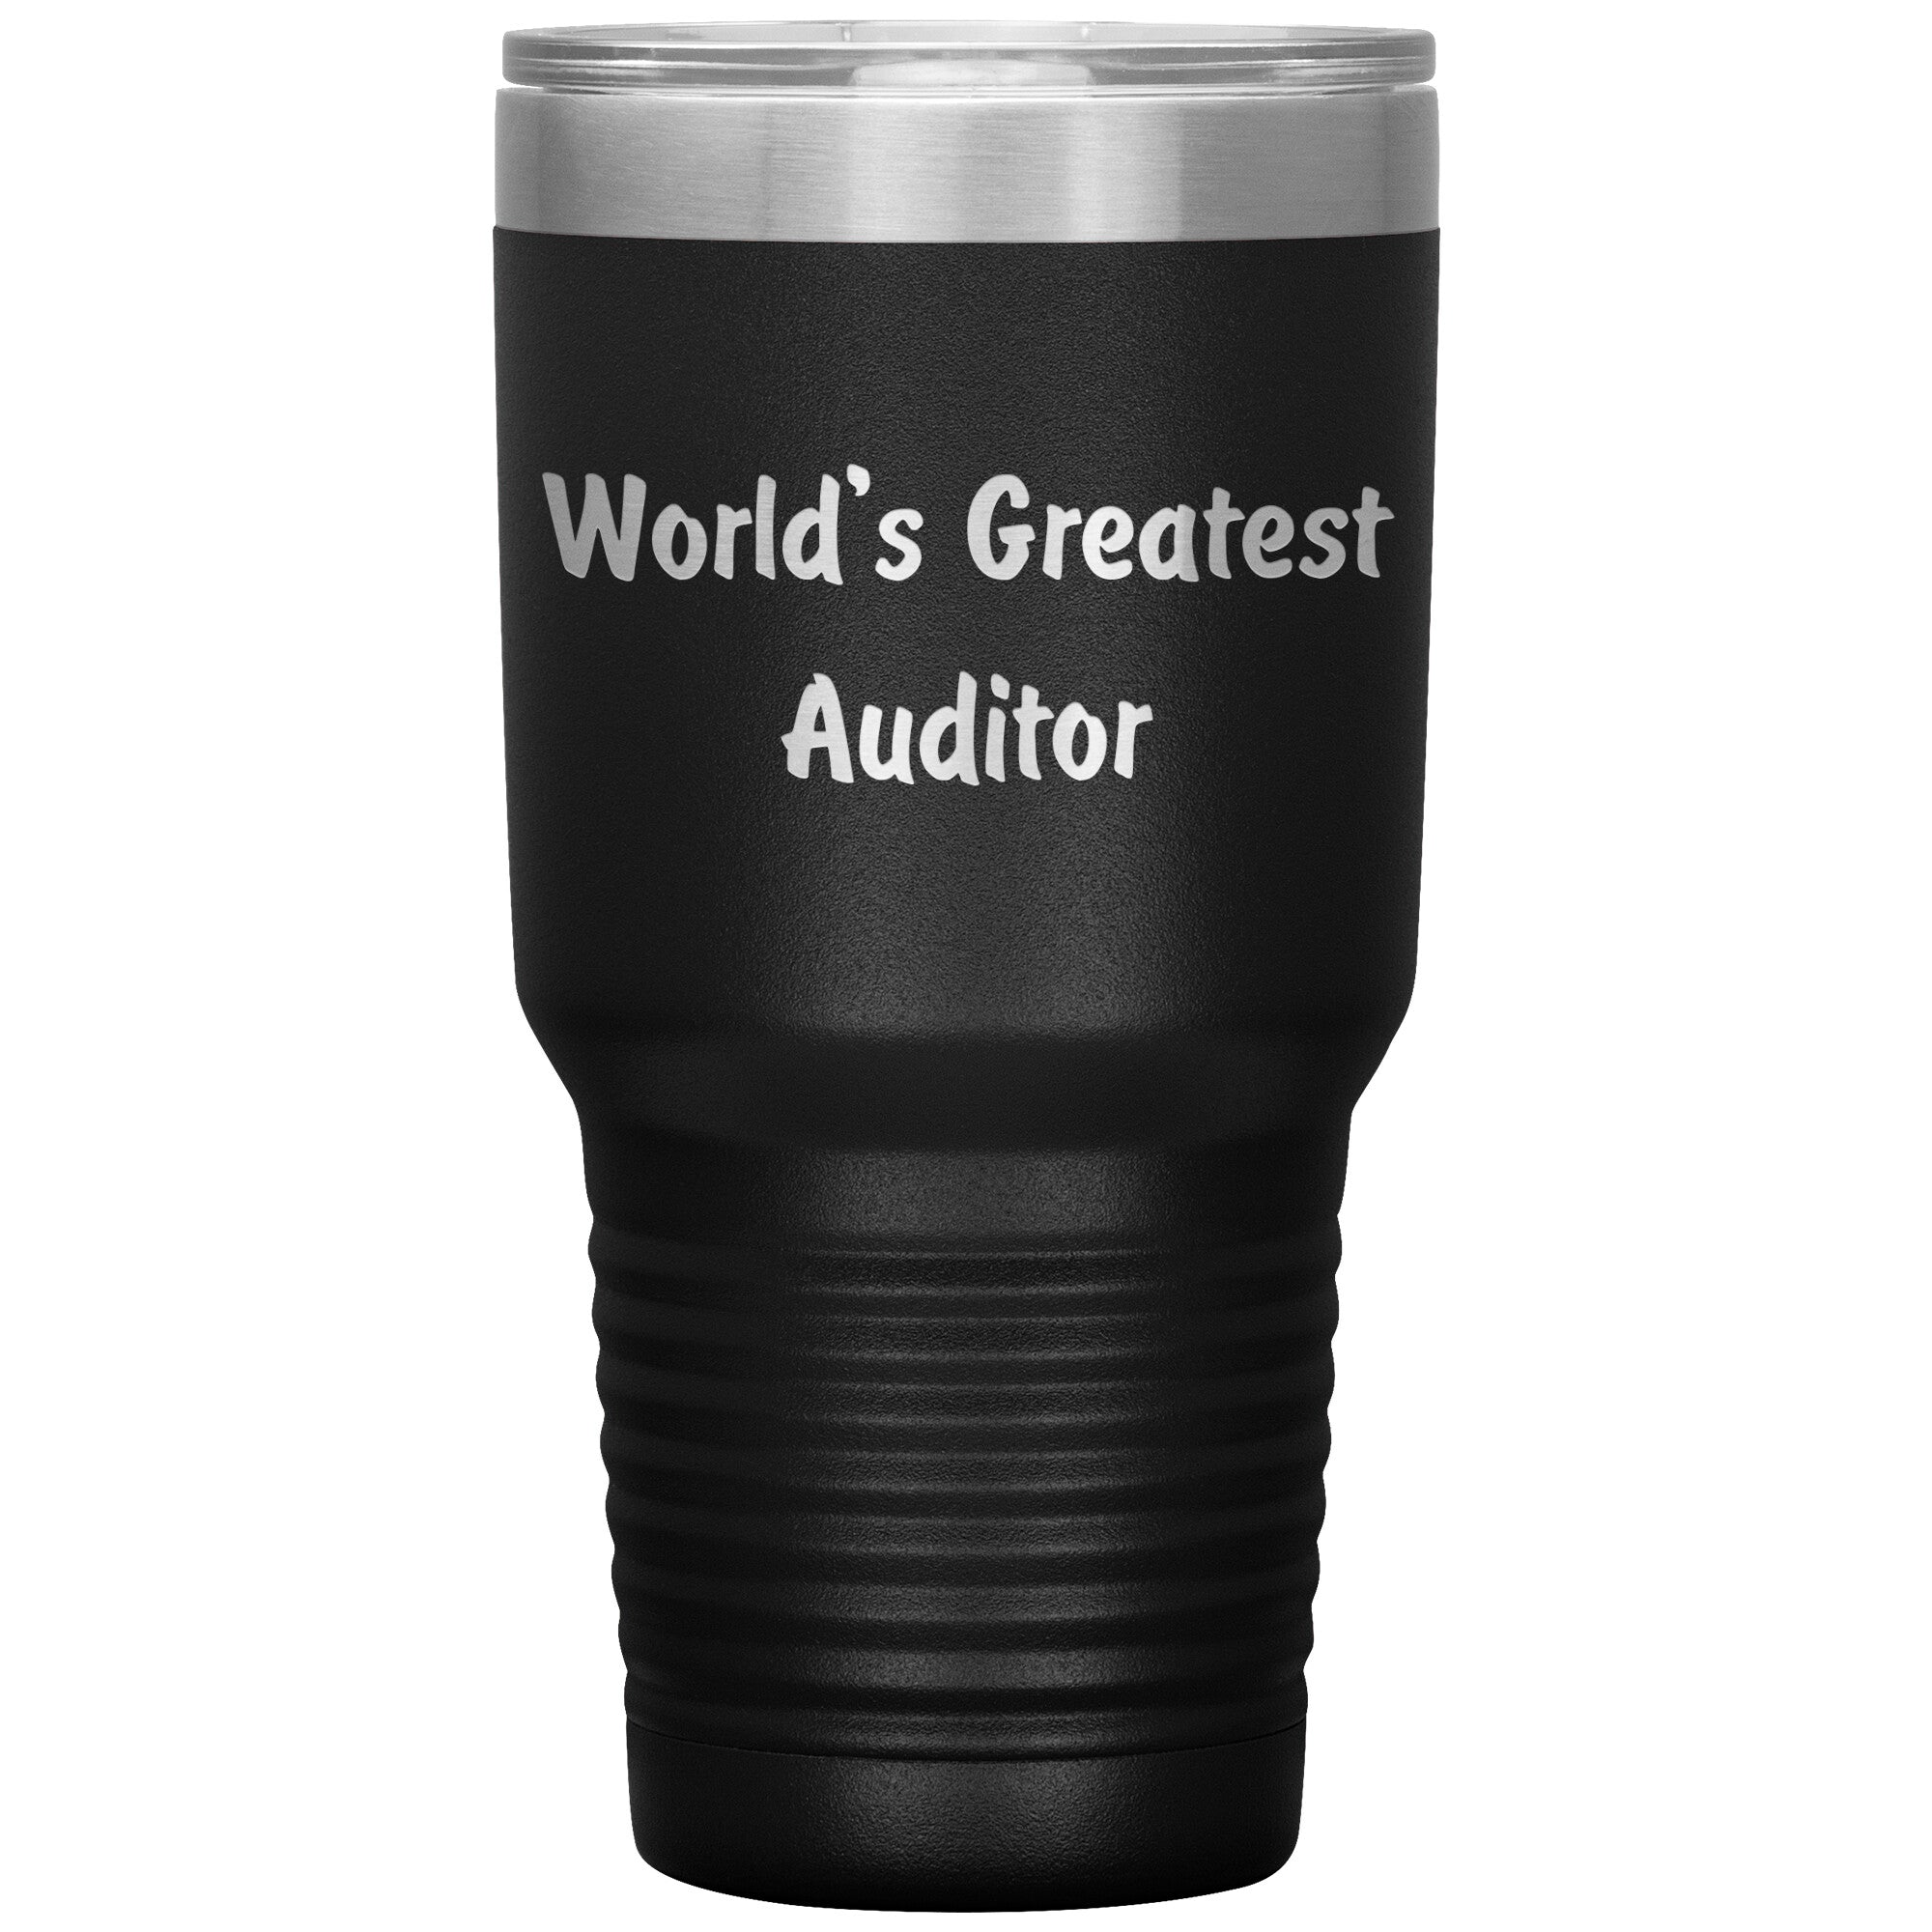 World's Greatest Auditor - 30oz Insulated Tumbler